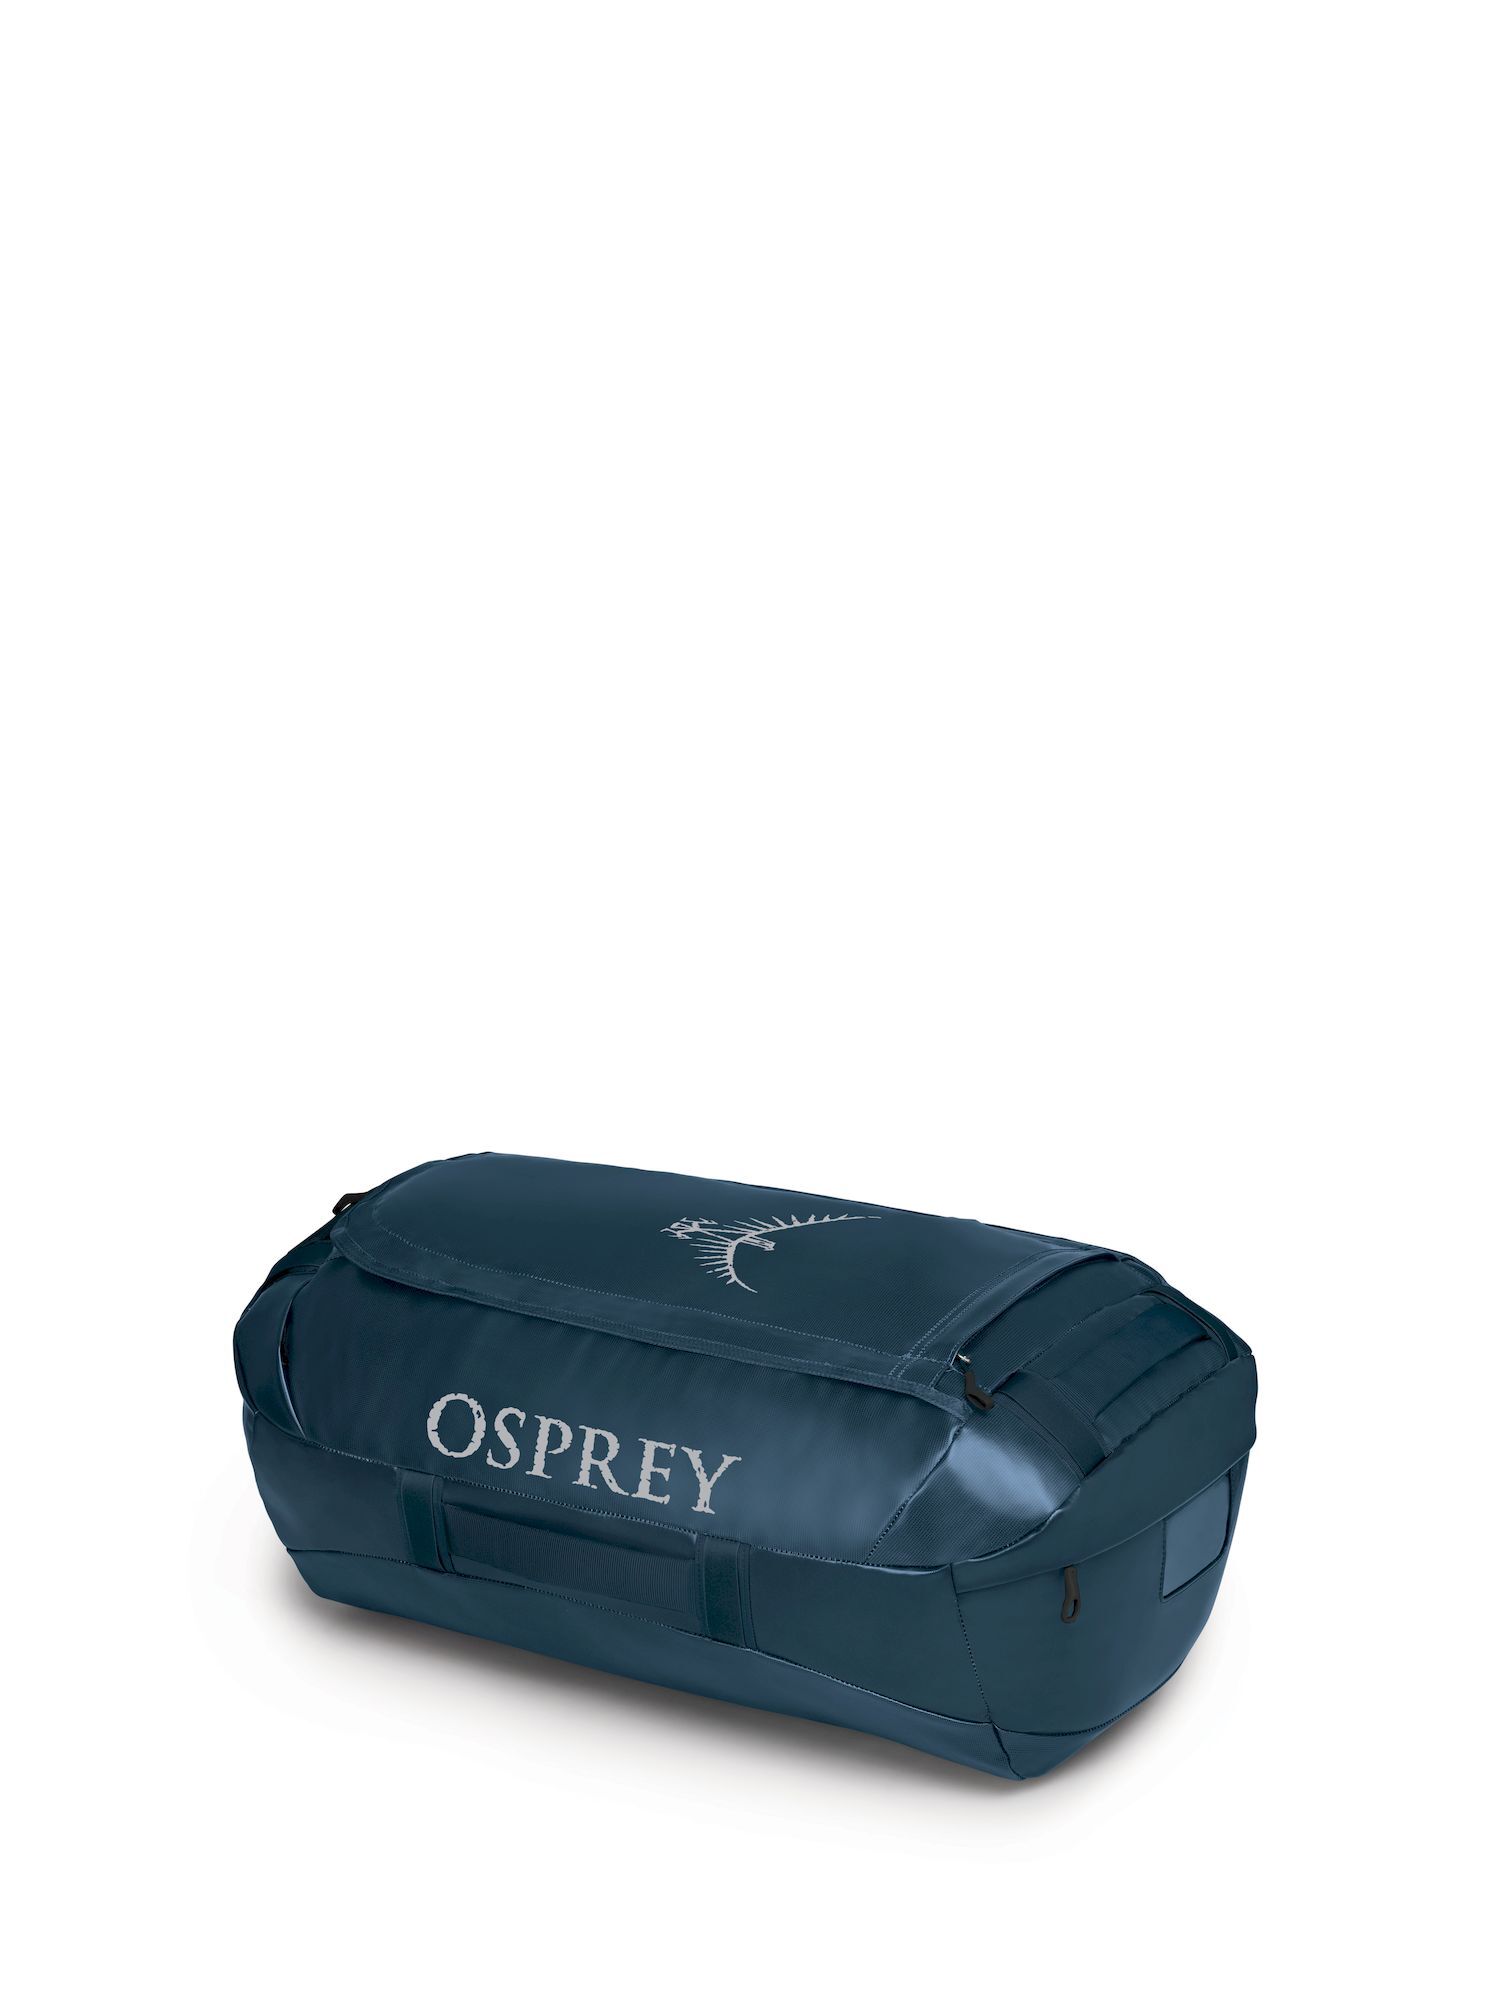 Osprey - Transporter 65 - Luggage